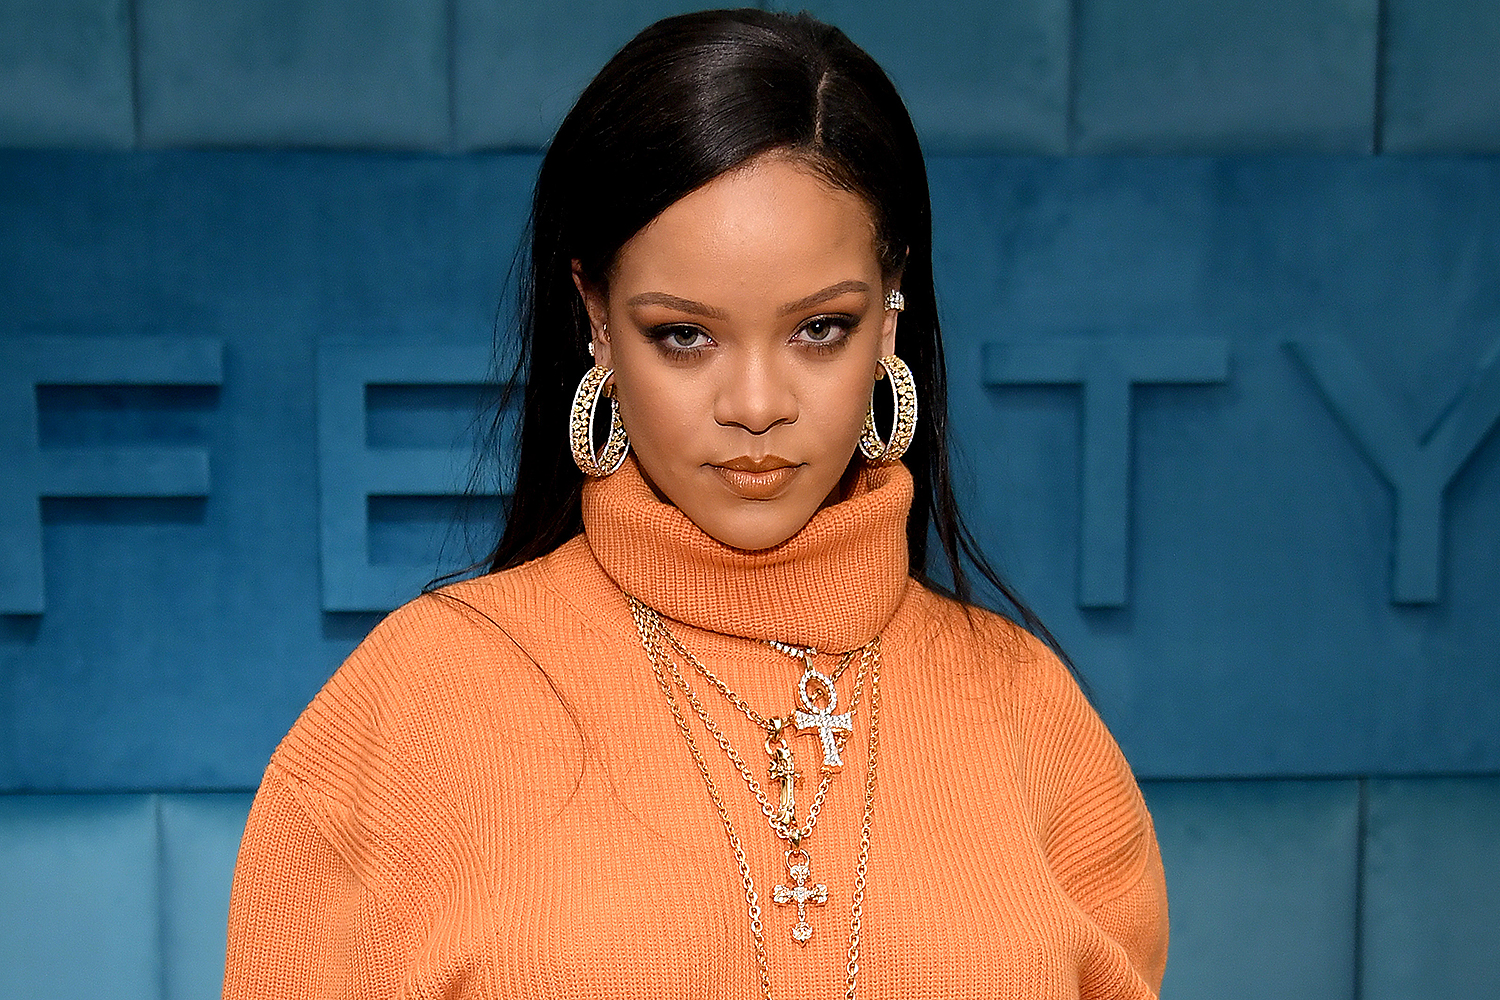 Rihanna Net Worth Of $1.7 Billion, Is The World's Richest Female Musician